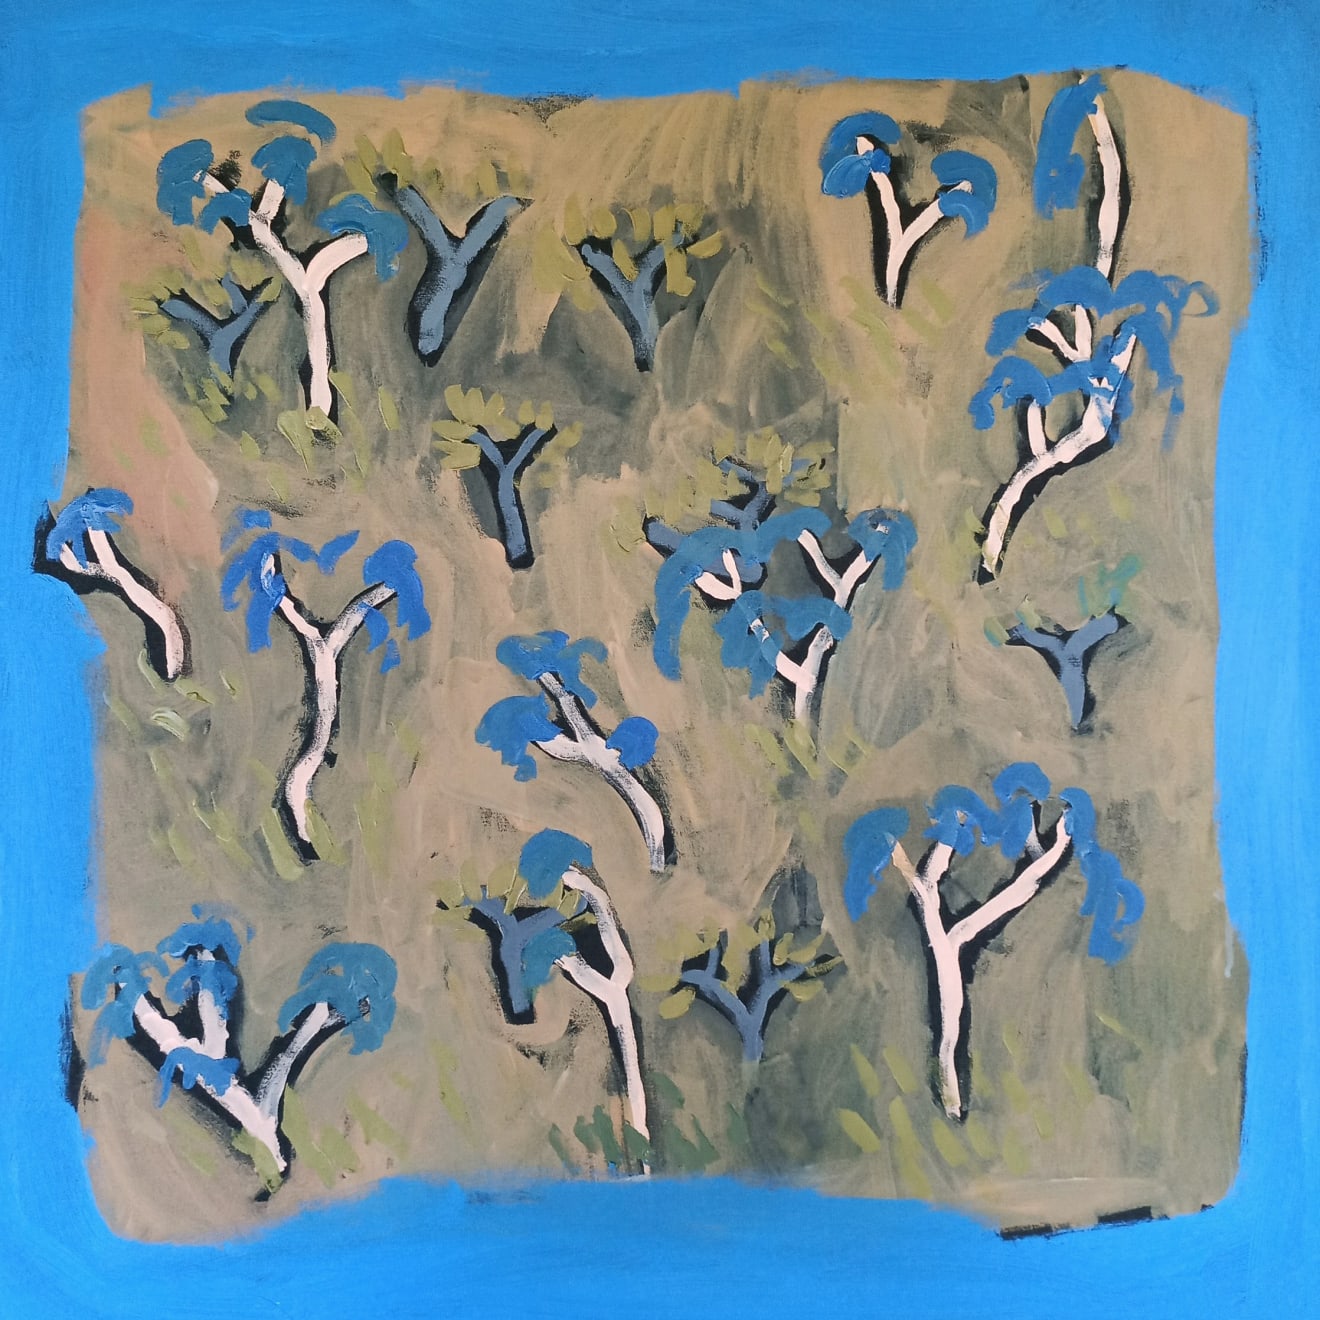 ghost gums at trephina gorge (alherrkentye) Acrylic on Canvas Original 60 x 60 cm AUD $1100 GBP £560 SOLD